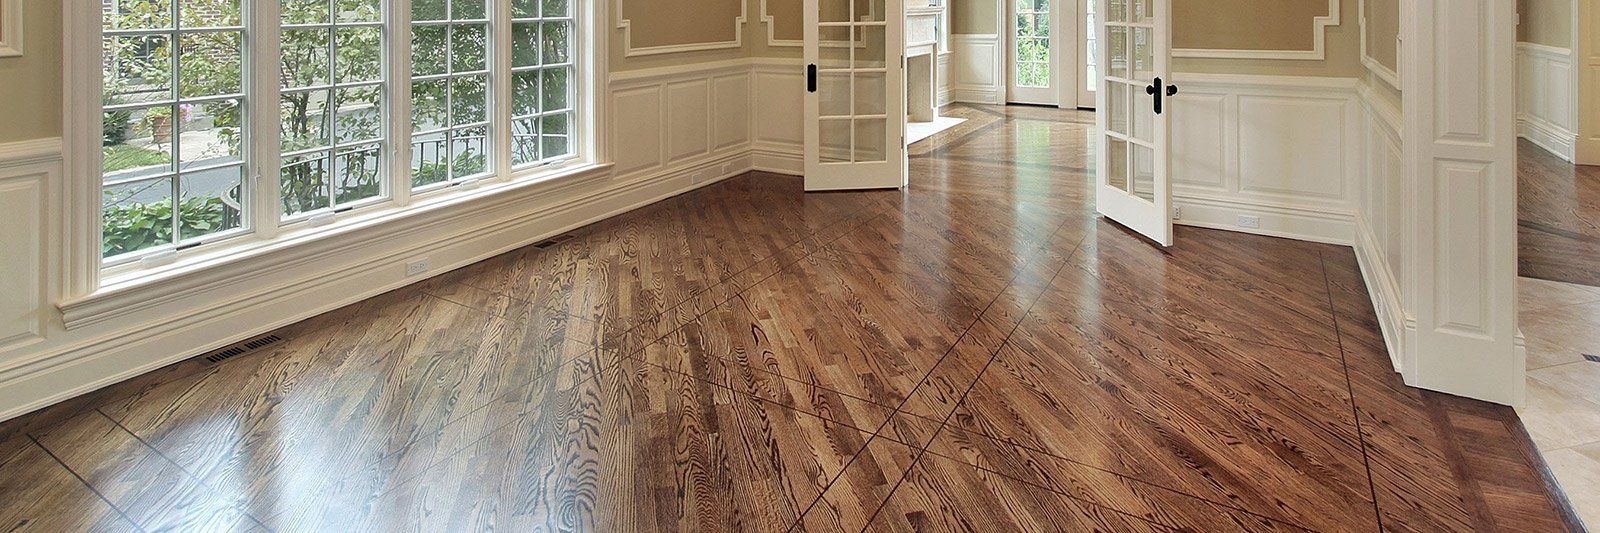 Home wood flooring